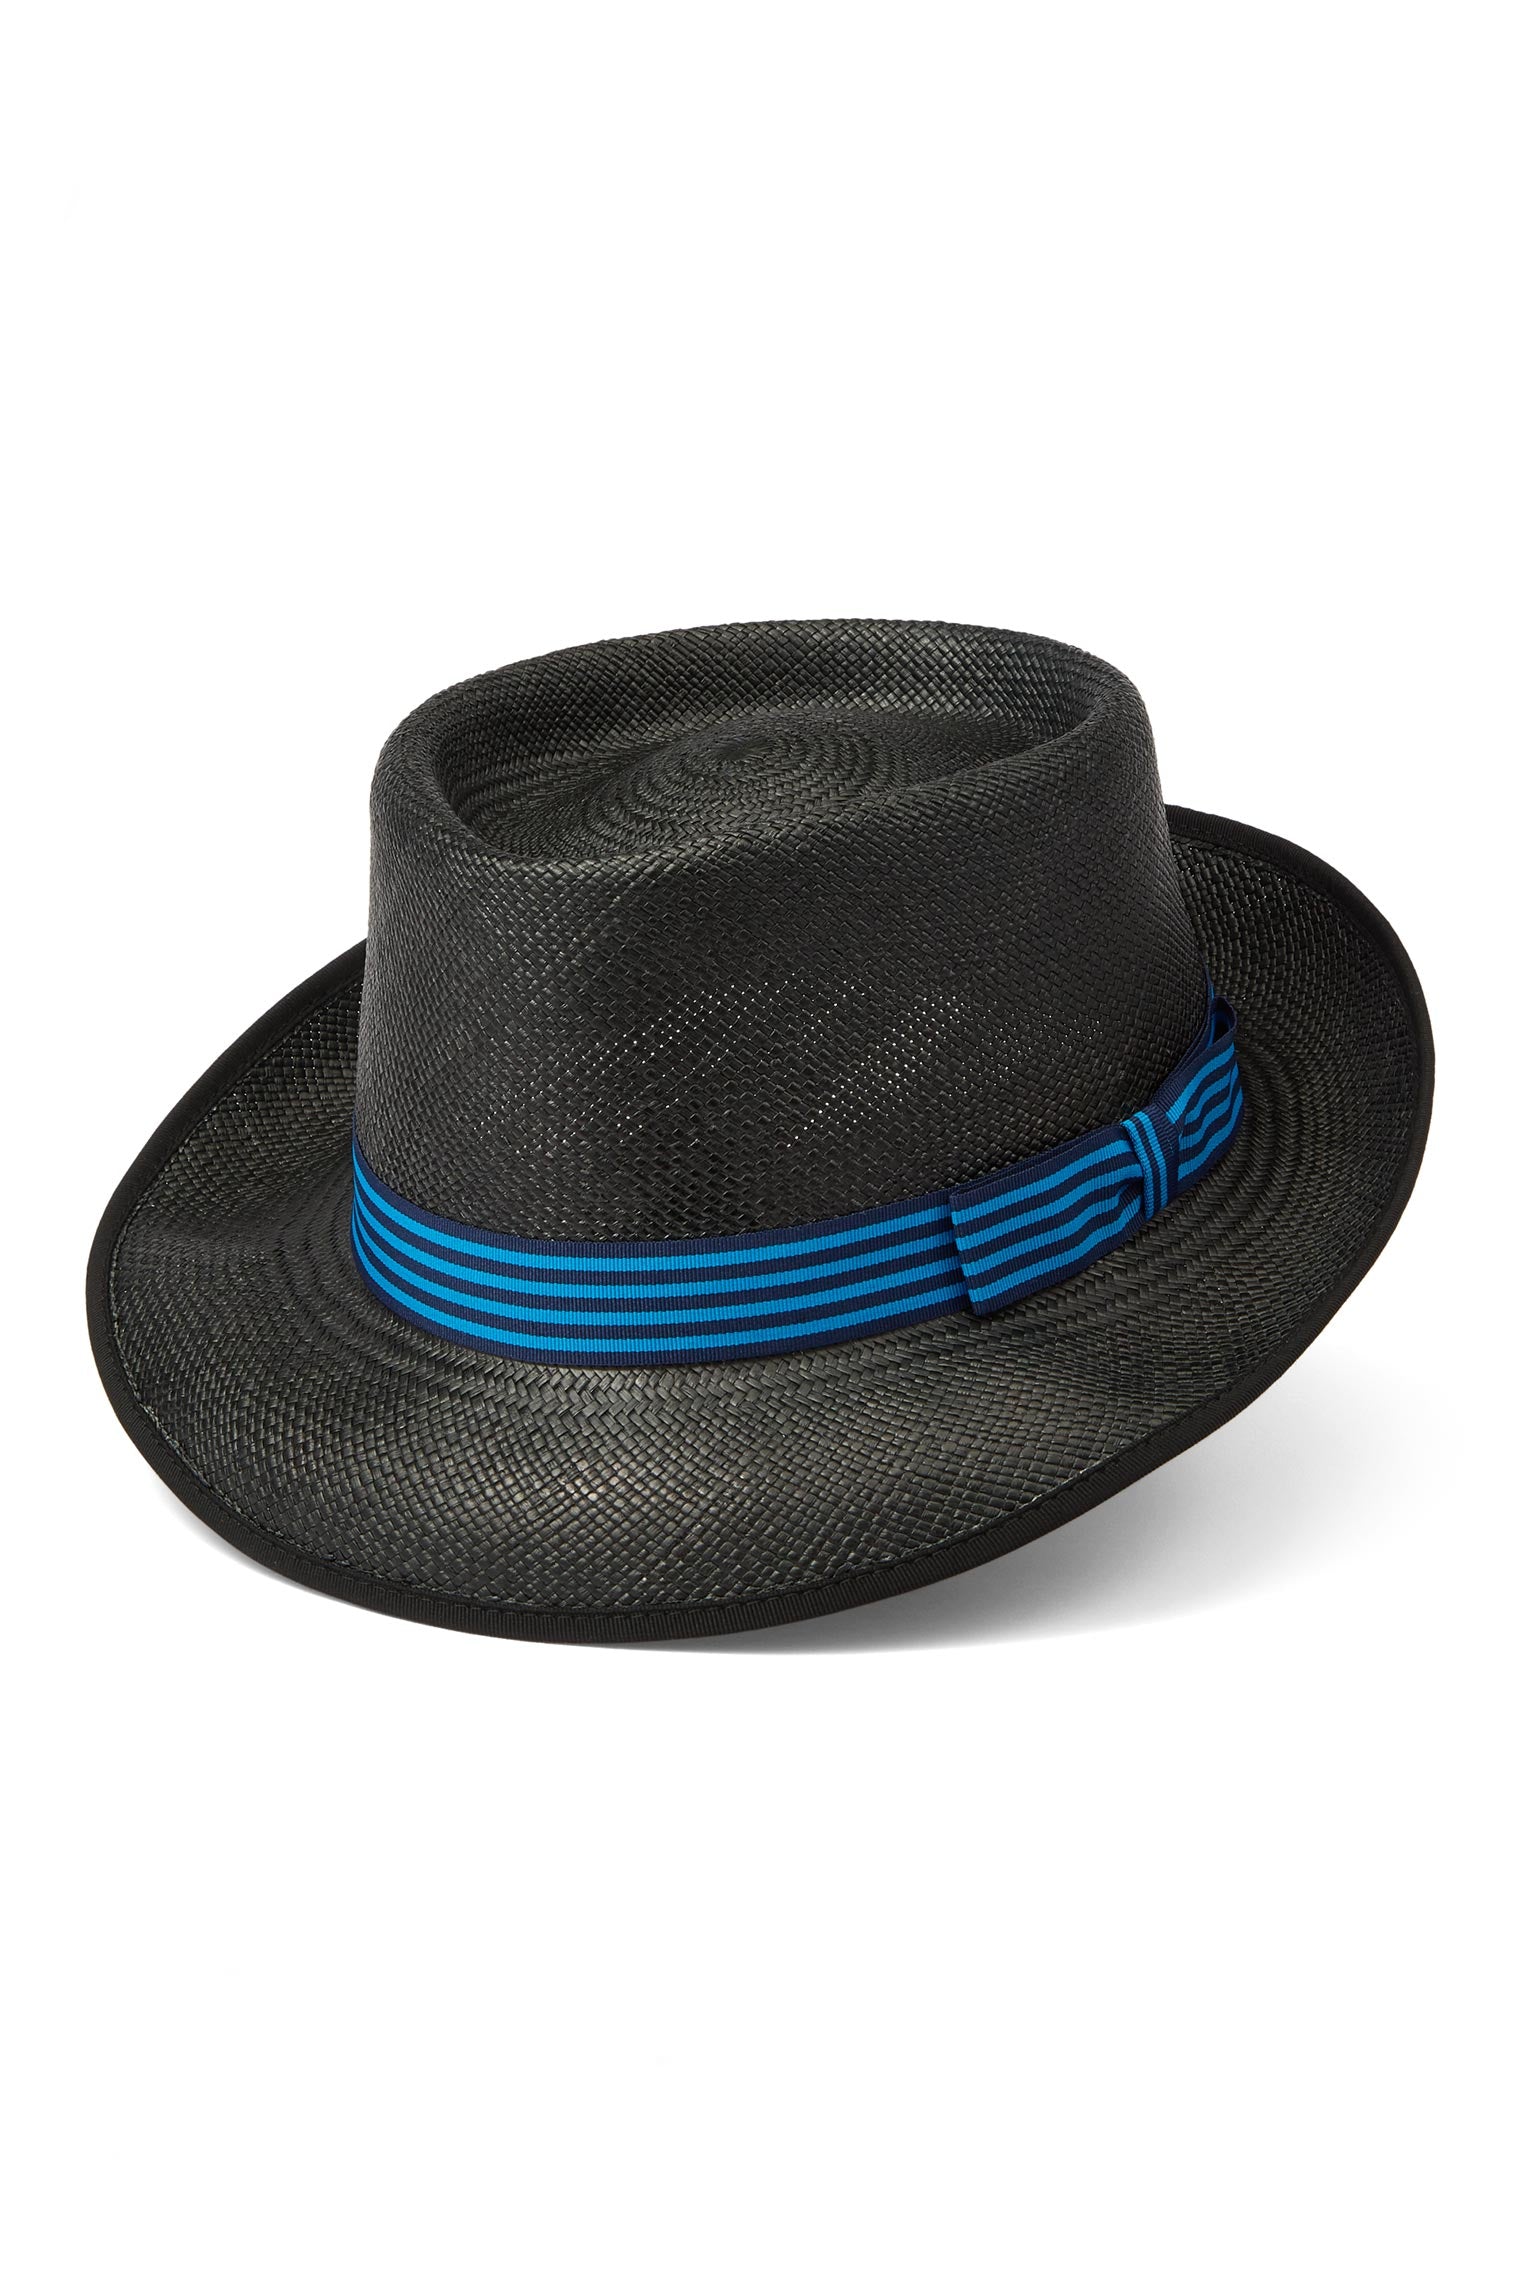 The Stoke - Panama Hats - Lock & Co. Hatters London UK